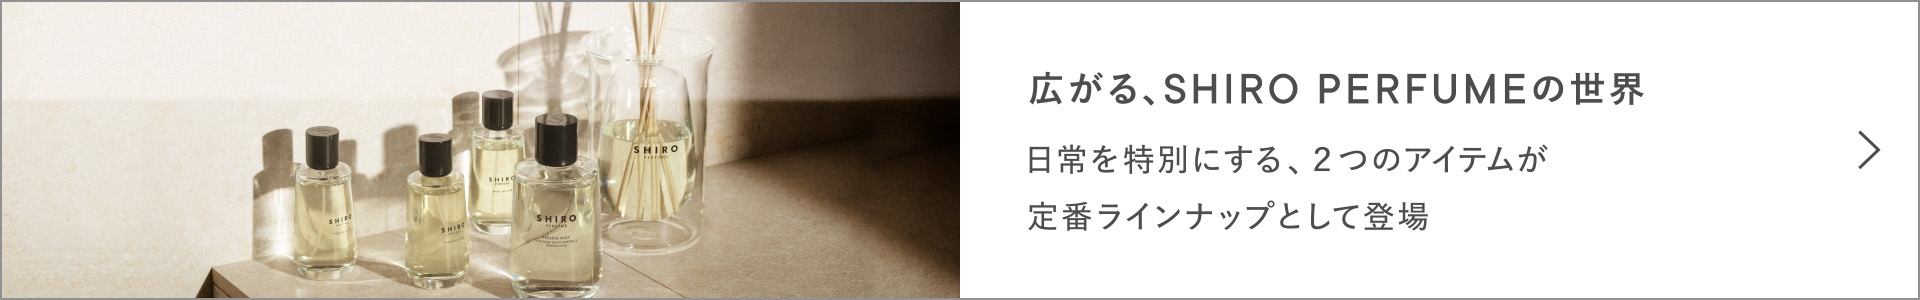 SHIRO PERFUME FREESIA MIST | SHIROオフィシャルサイト